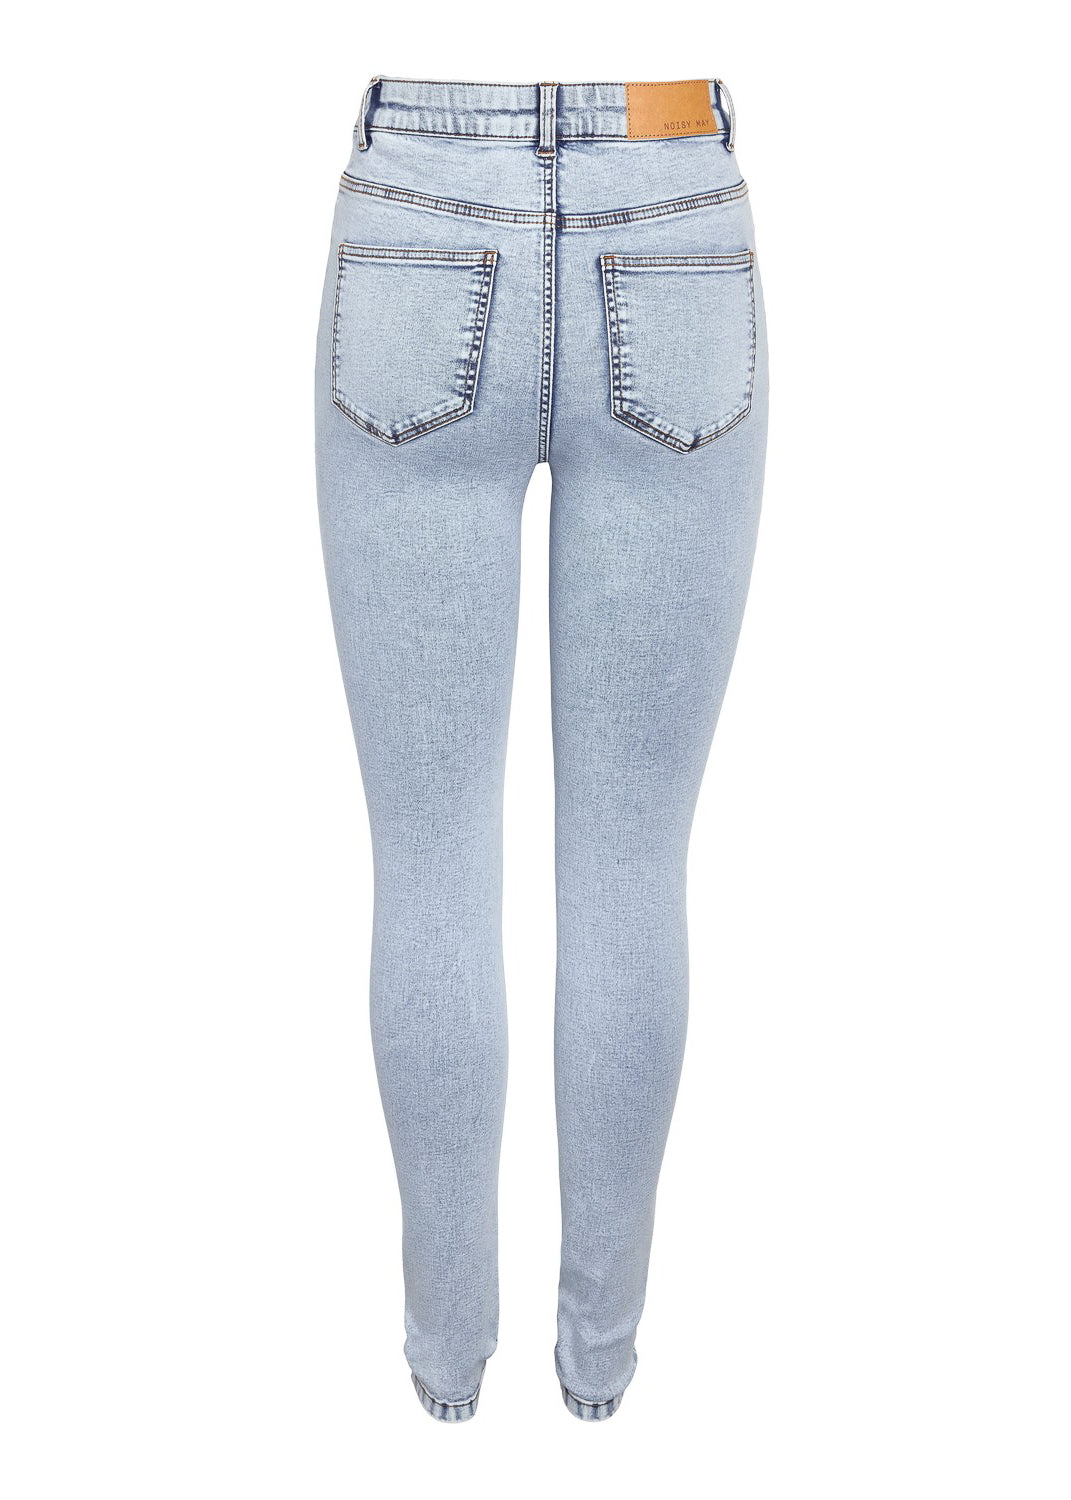 Callie Skinny Jeans - Washed Ultra Light Blue